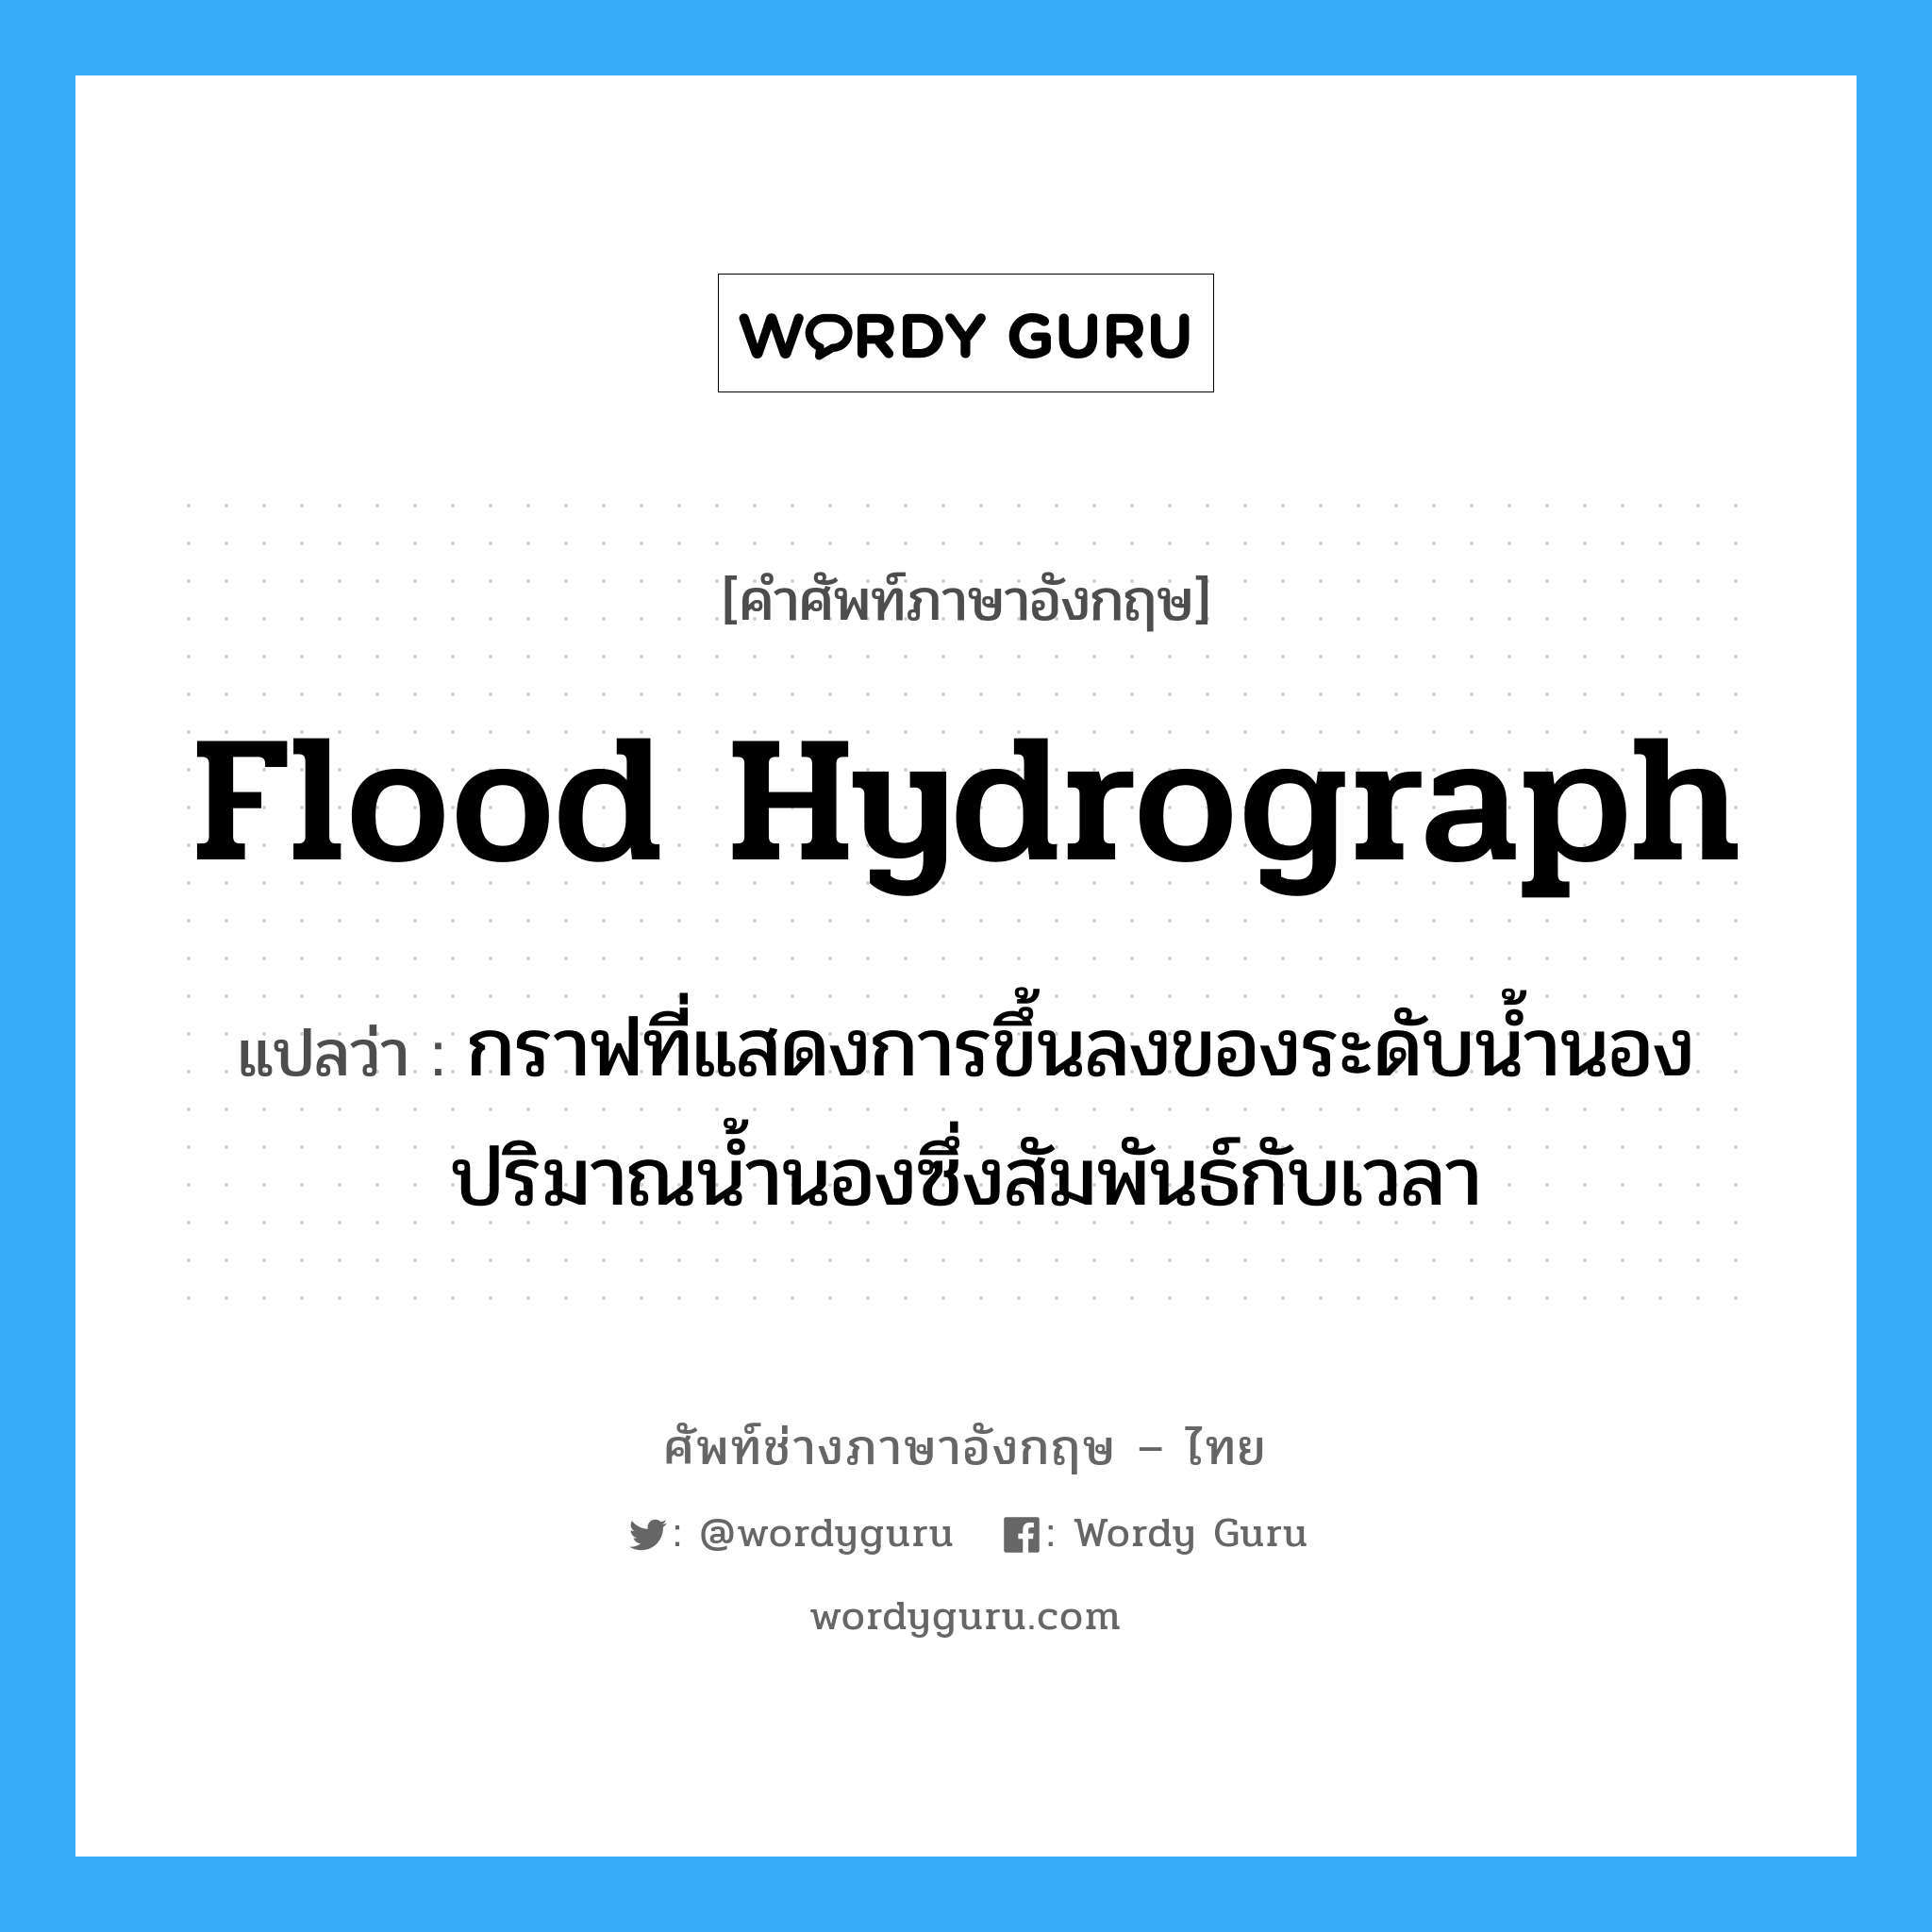 flood hydrograph แปลว่า?, คำศัพท์ช่างภาษาอังกฤษ - ไทย flood hydrograph คำศัพท์ภาษาอังกฤษ flood hydrograph แปลว่า กราฟที่แสดงการขึ้นลงของระดับน้ำนอง ปริมาณน้ำนองซึ่งสัมพันธ์กับเวลา